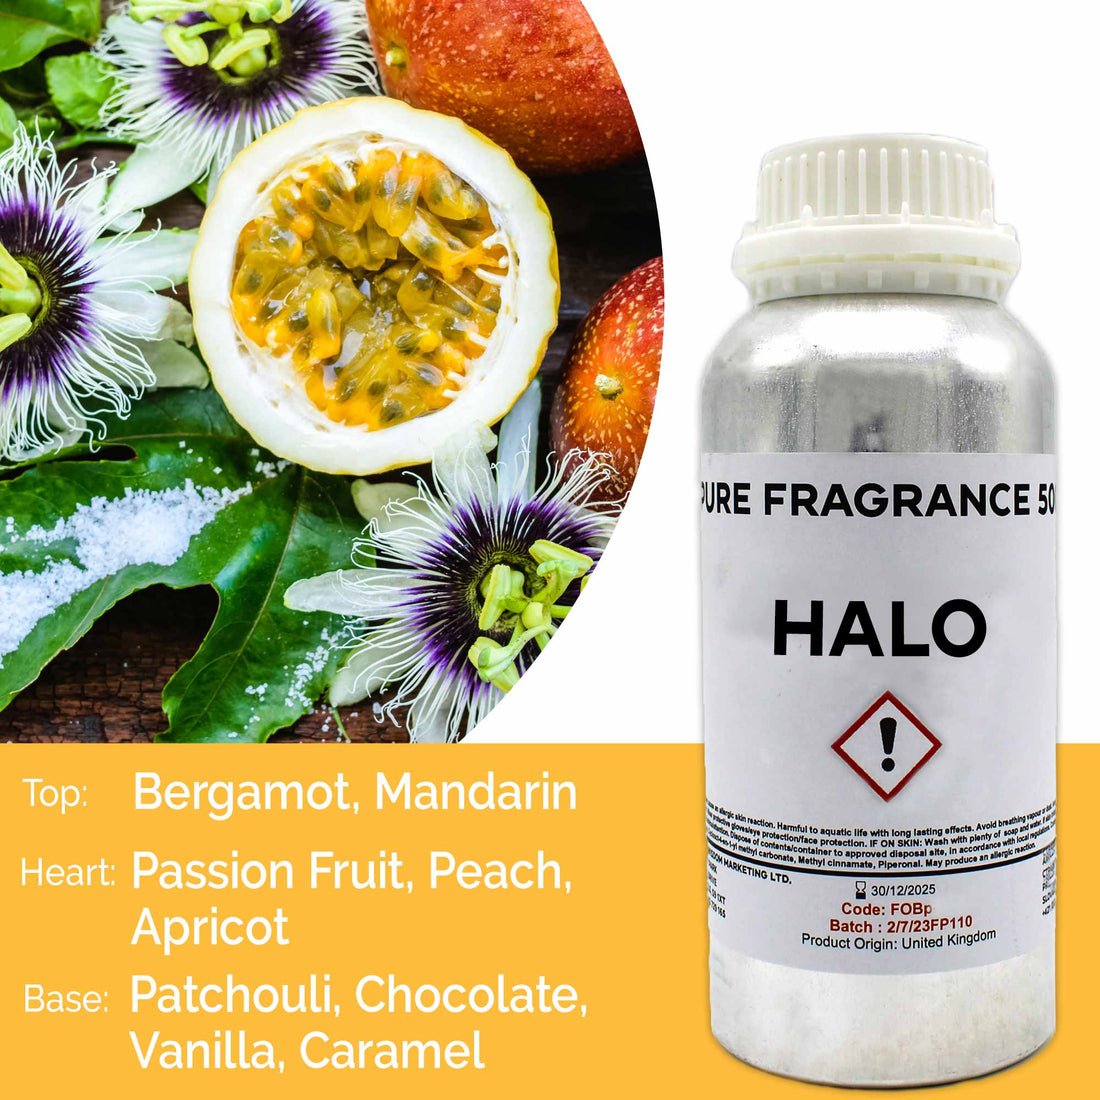 Halo Pure Fragrance Oil - 500ml